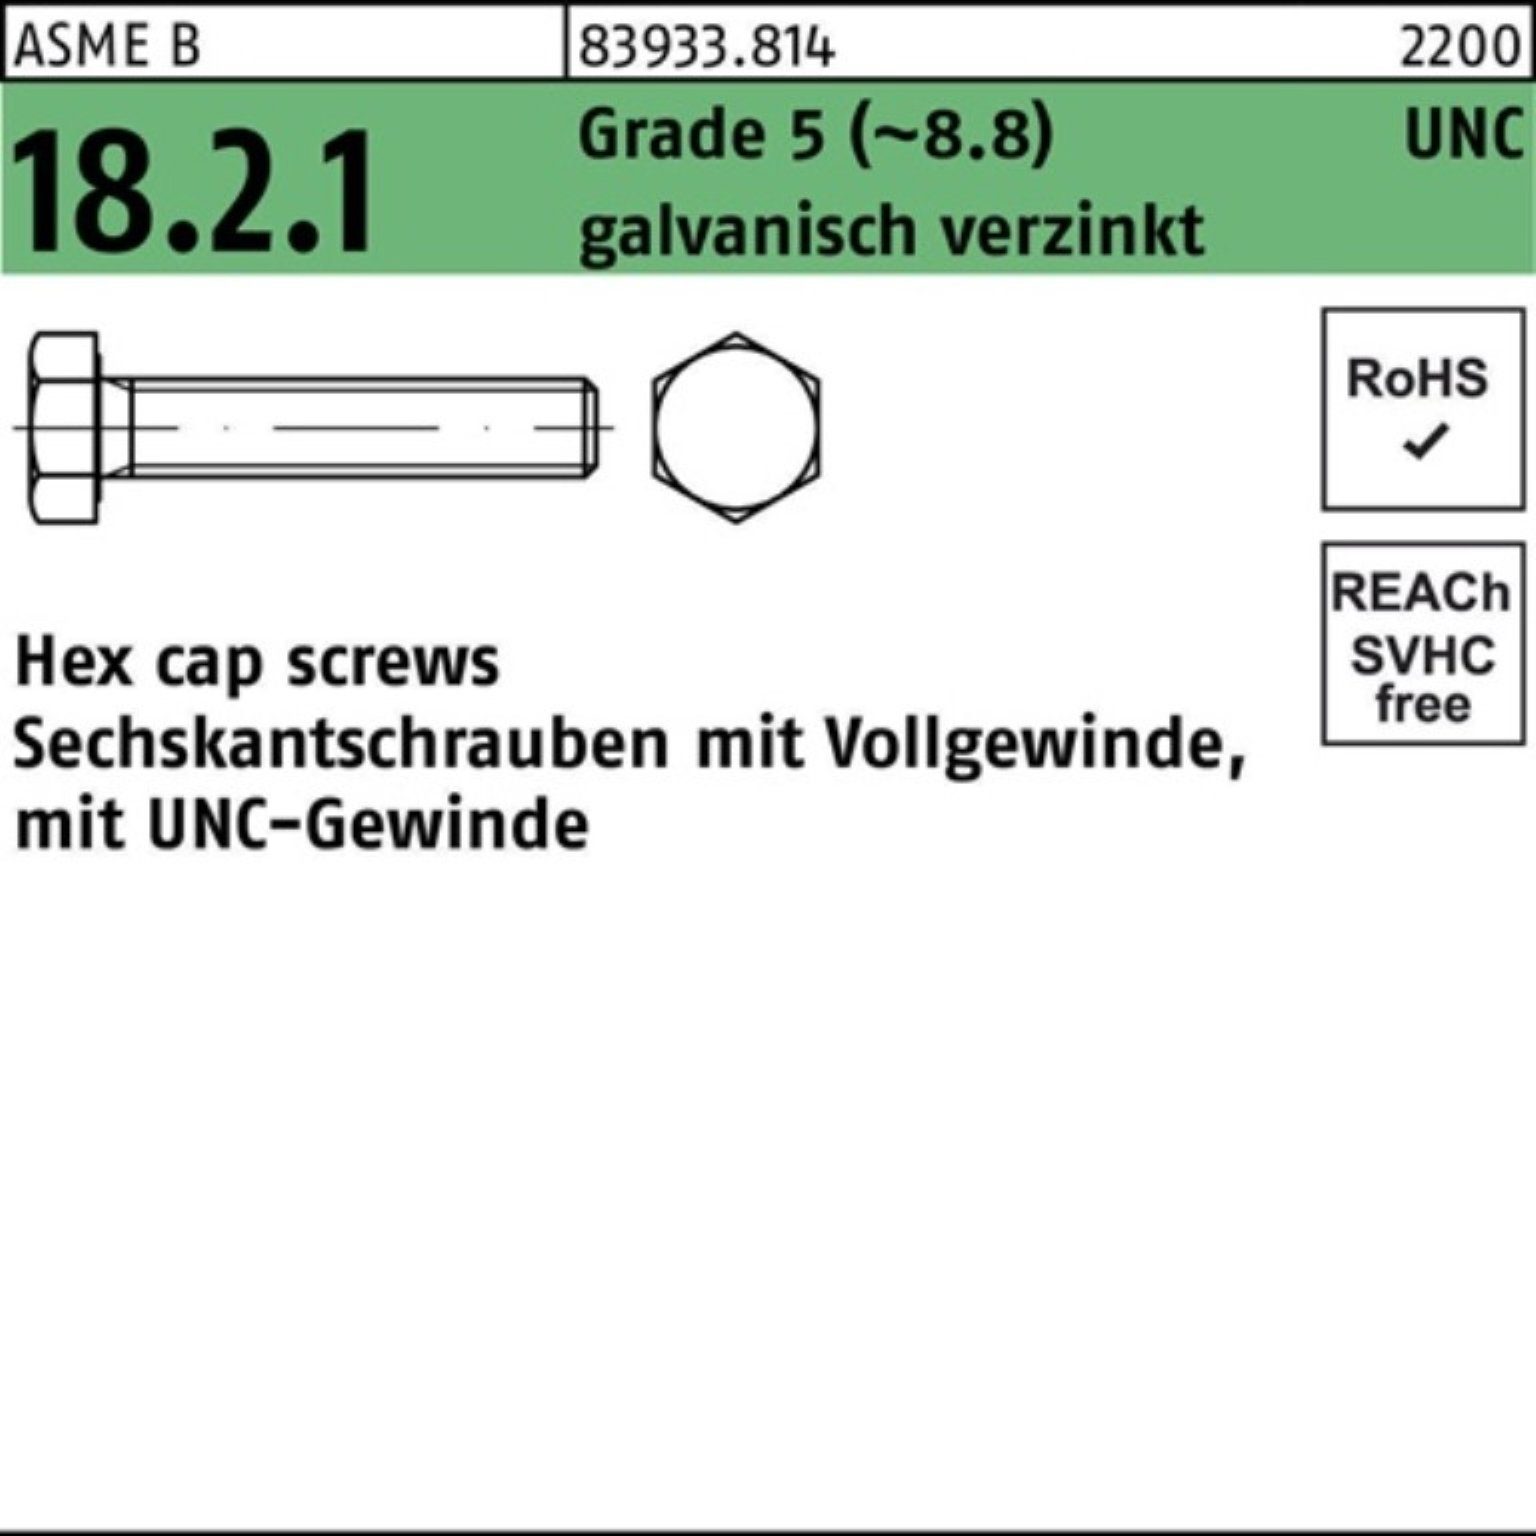 Reyher Sechskantschraube 100er Pack Sechskantschraube R 83933 UNC VG 5/8x2 Grade 5 (8.8) galv.